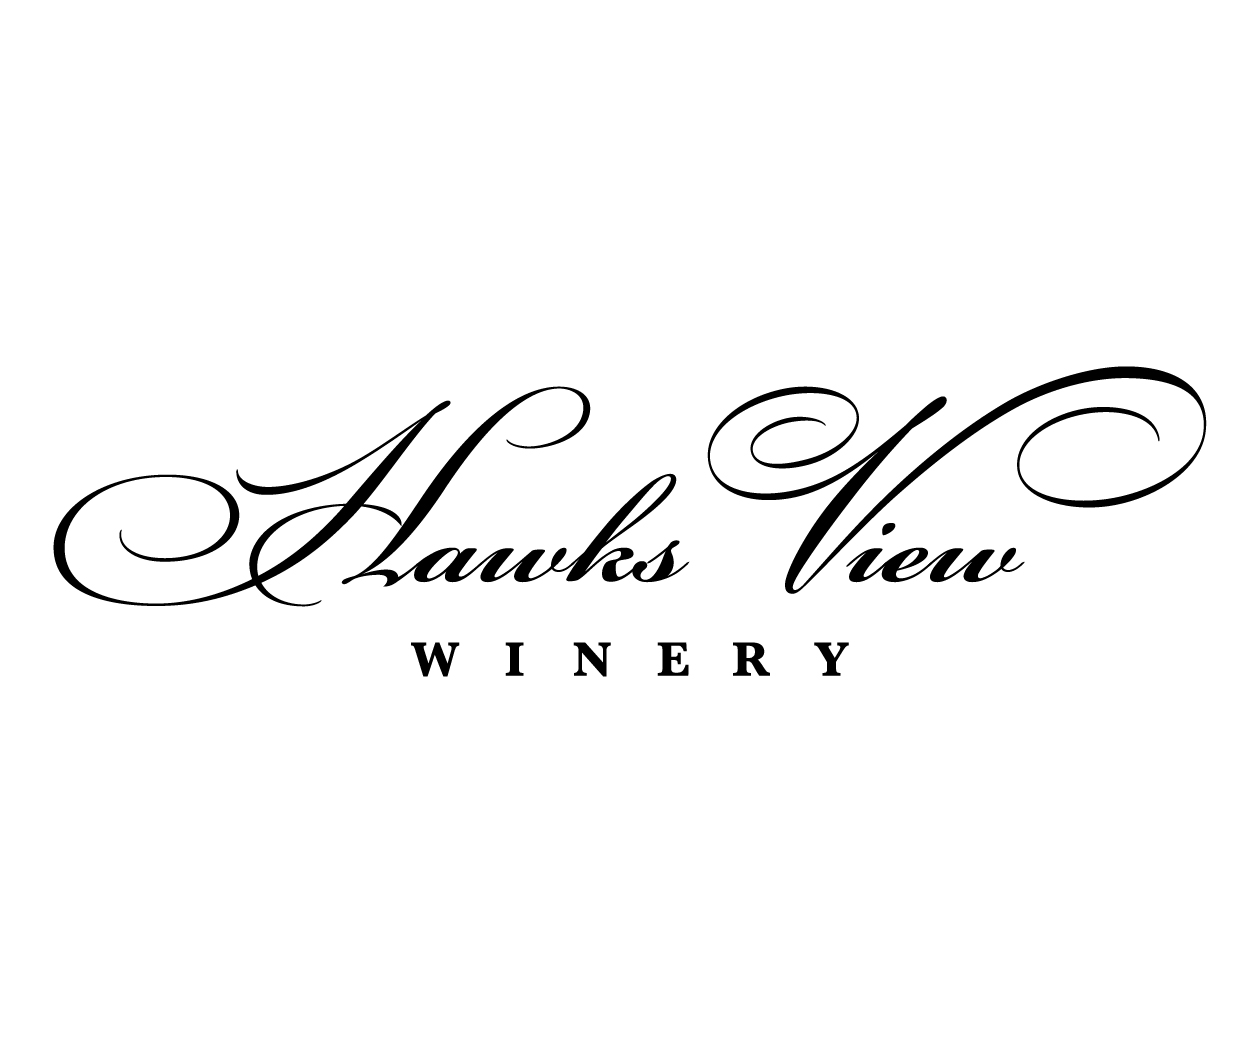 Hawks View Winery